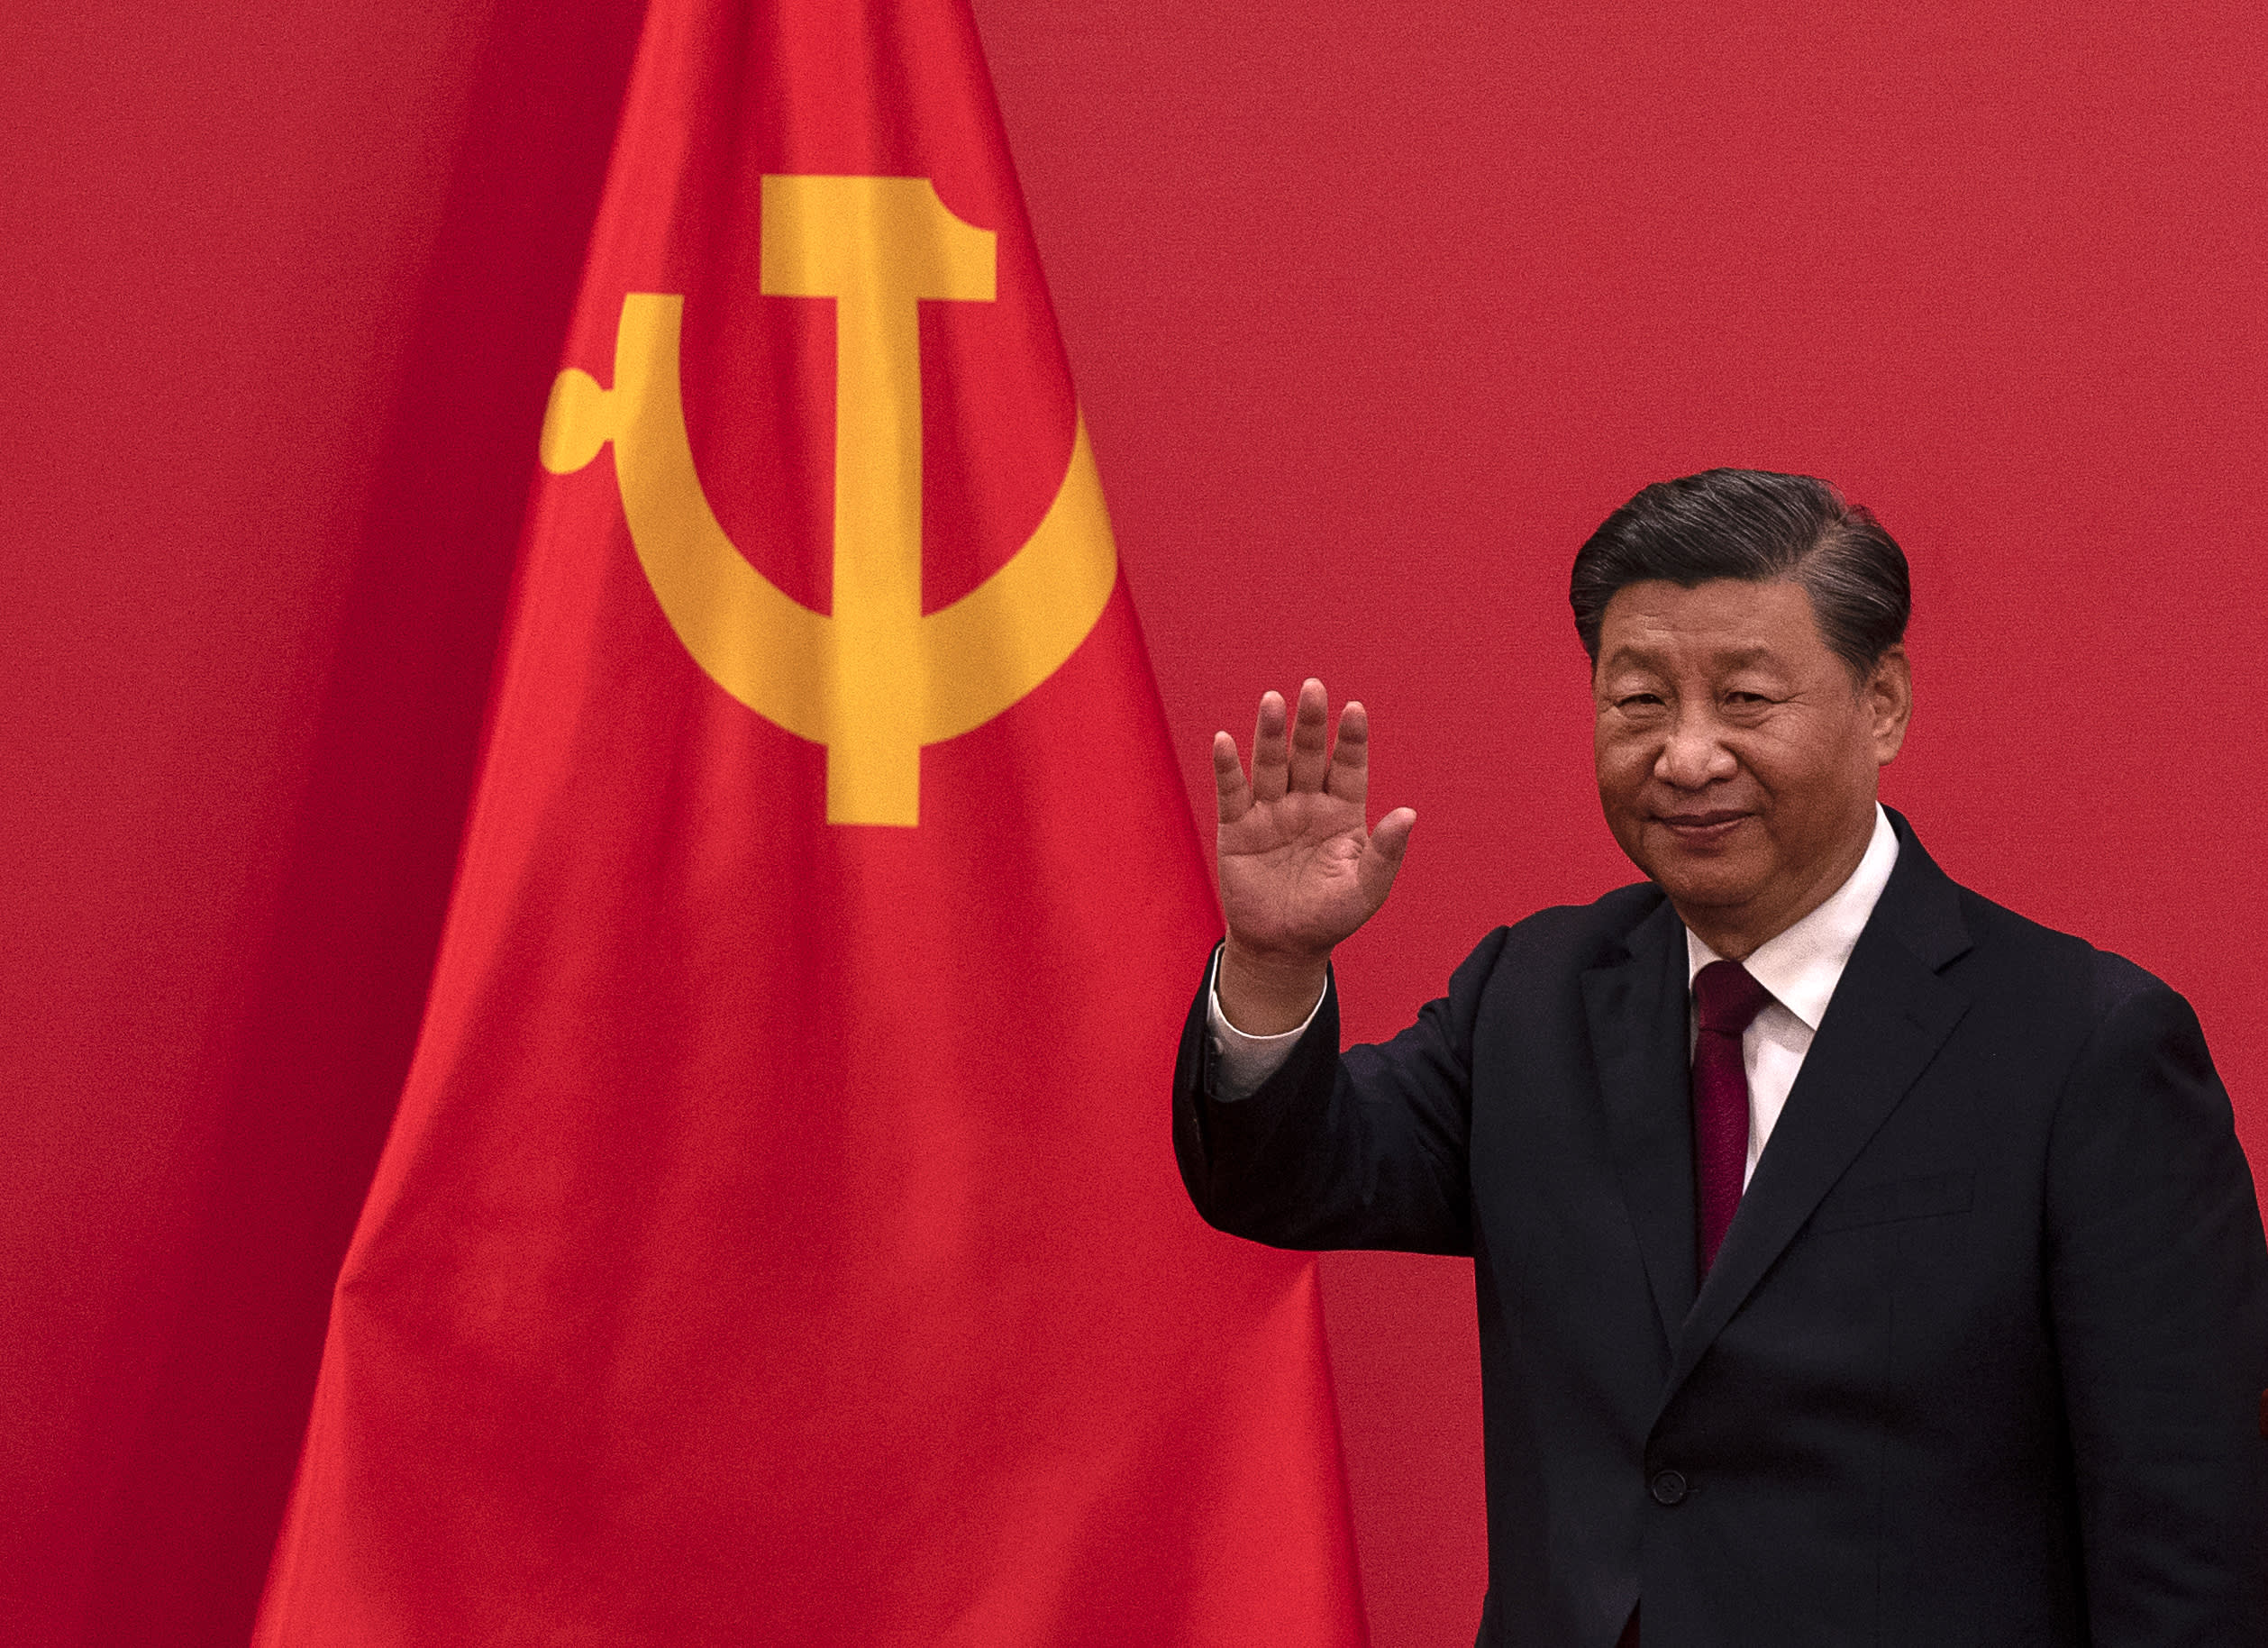 El presidente chino ha asegurado un tercer mandato sin precedentes como presidente